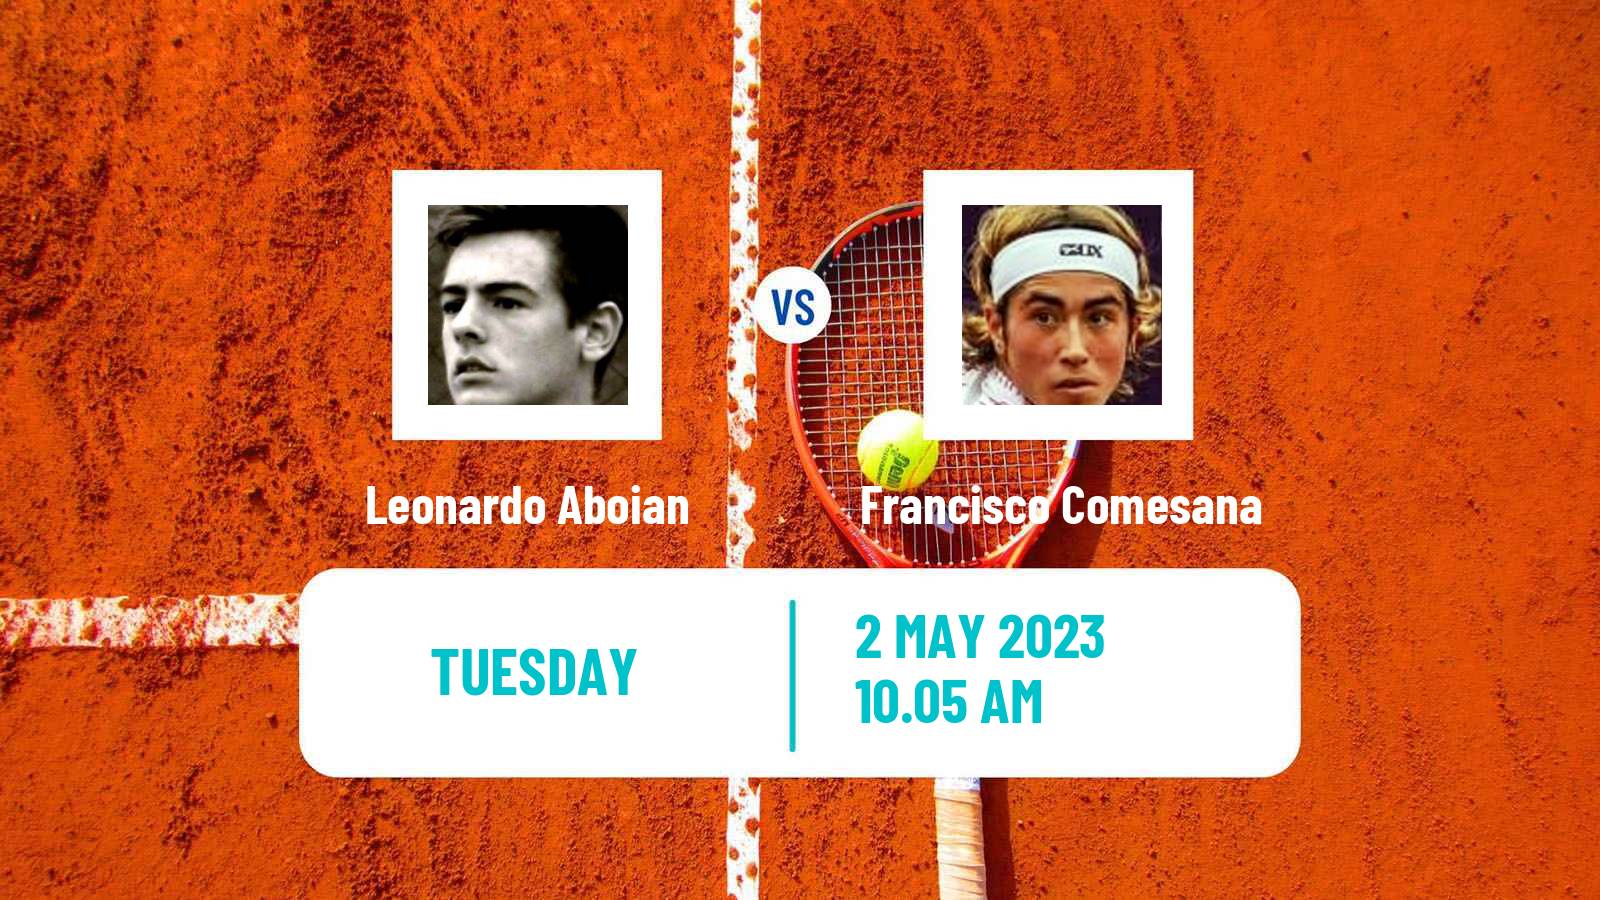 Tennis ATP Challenger Leonardo Aboian - Francisco Comesana